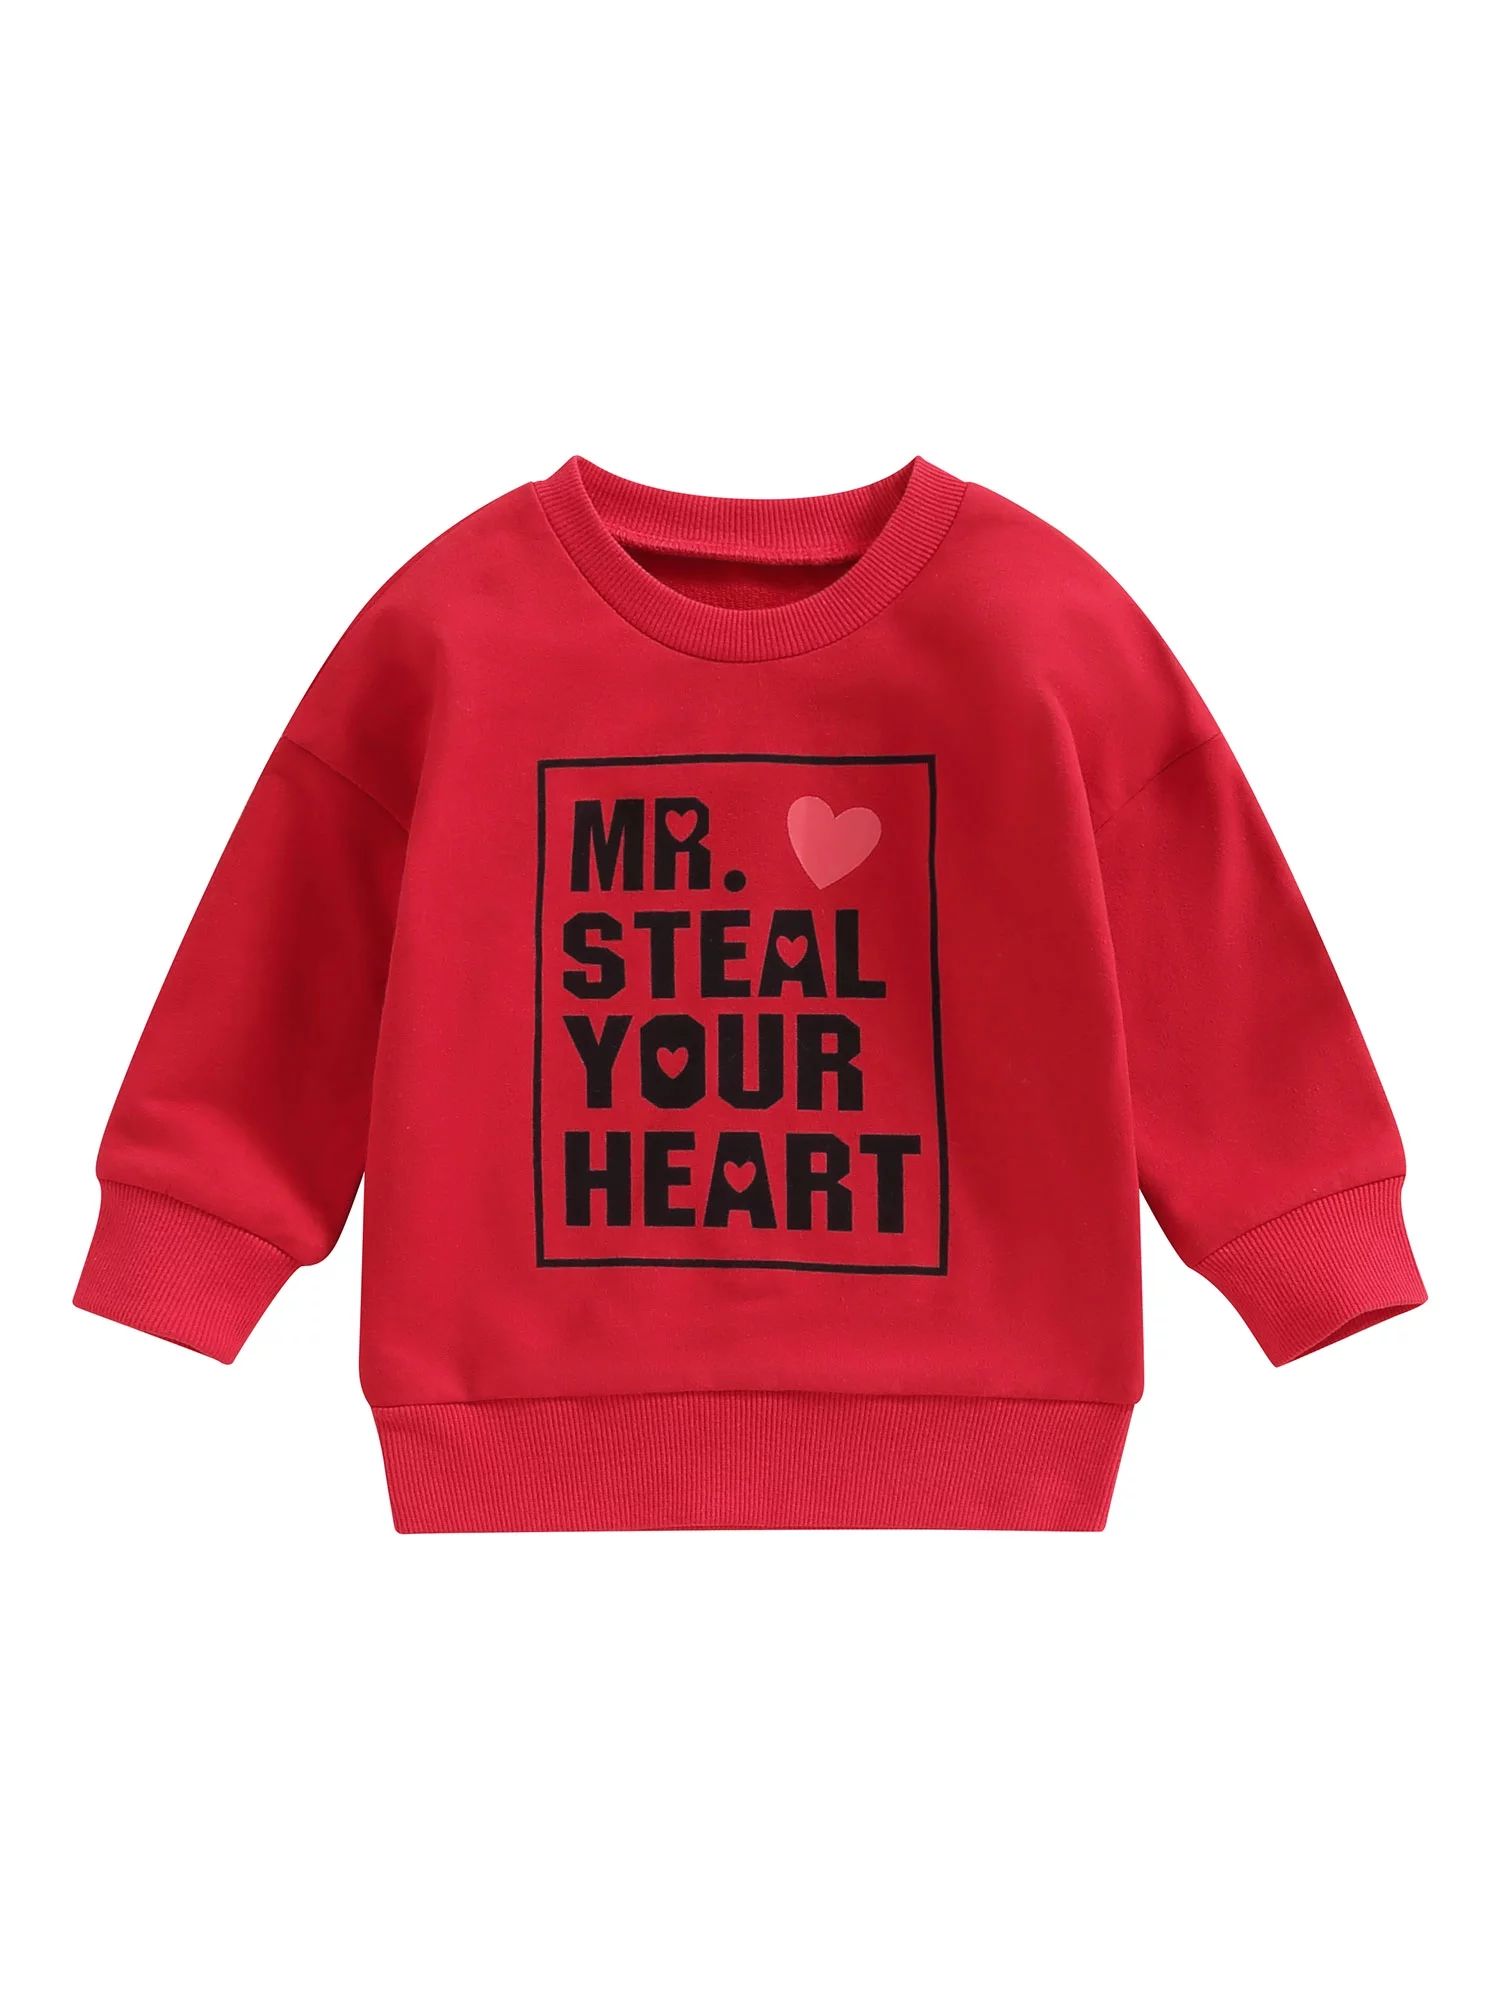 Bagilaanoe Toddler Baby Boy Valentine's Day Sweatshirt Long Sleeve Letter Print Pullover 6M 12M 1... | Walmart (US)